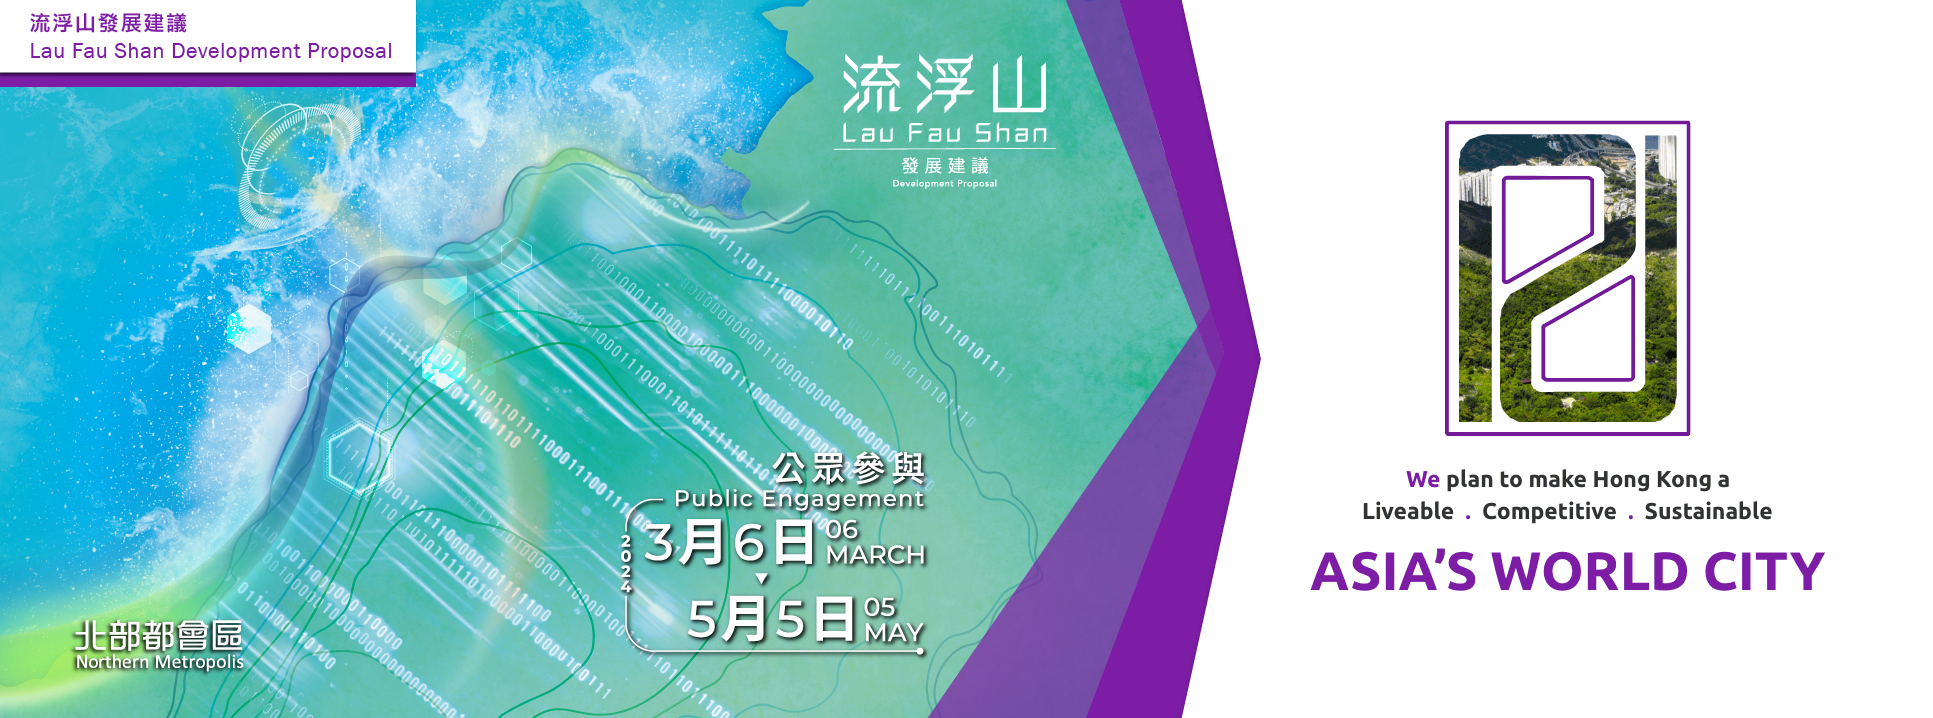 Banner of Lau Fau Shan Development Proposal